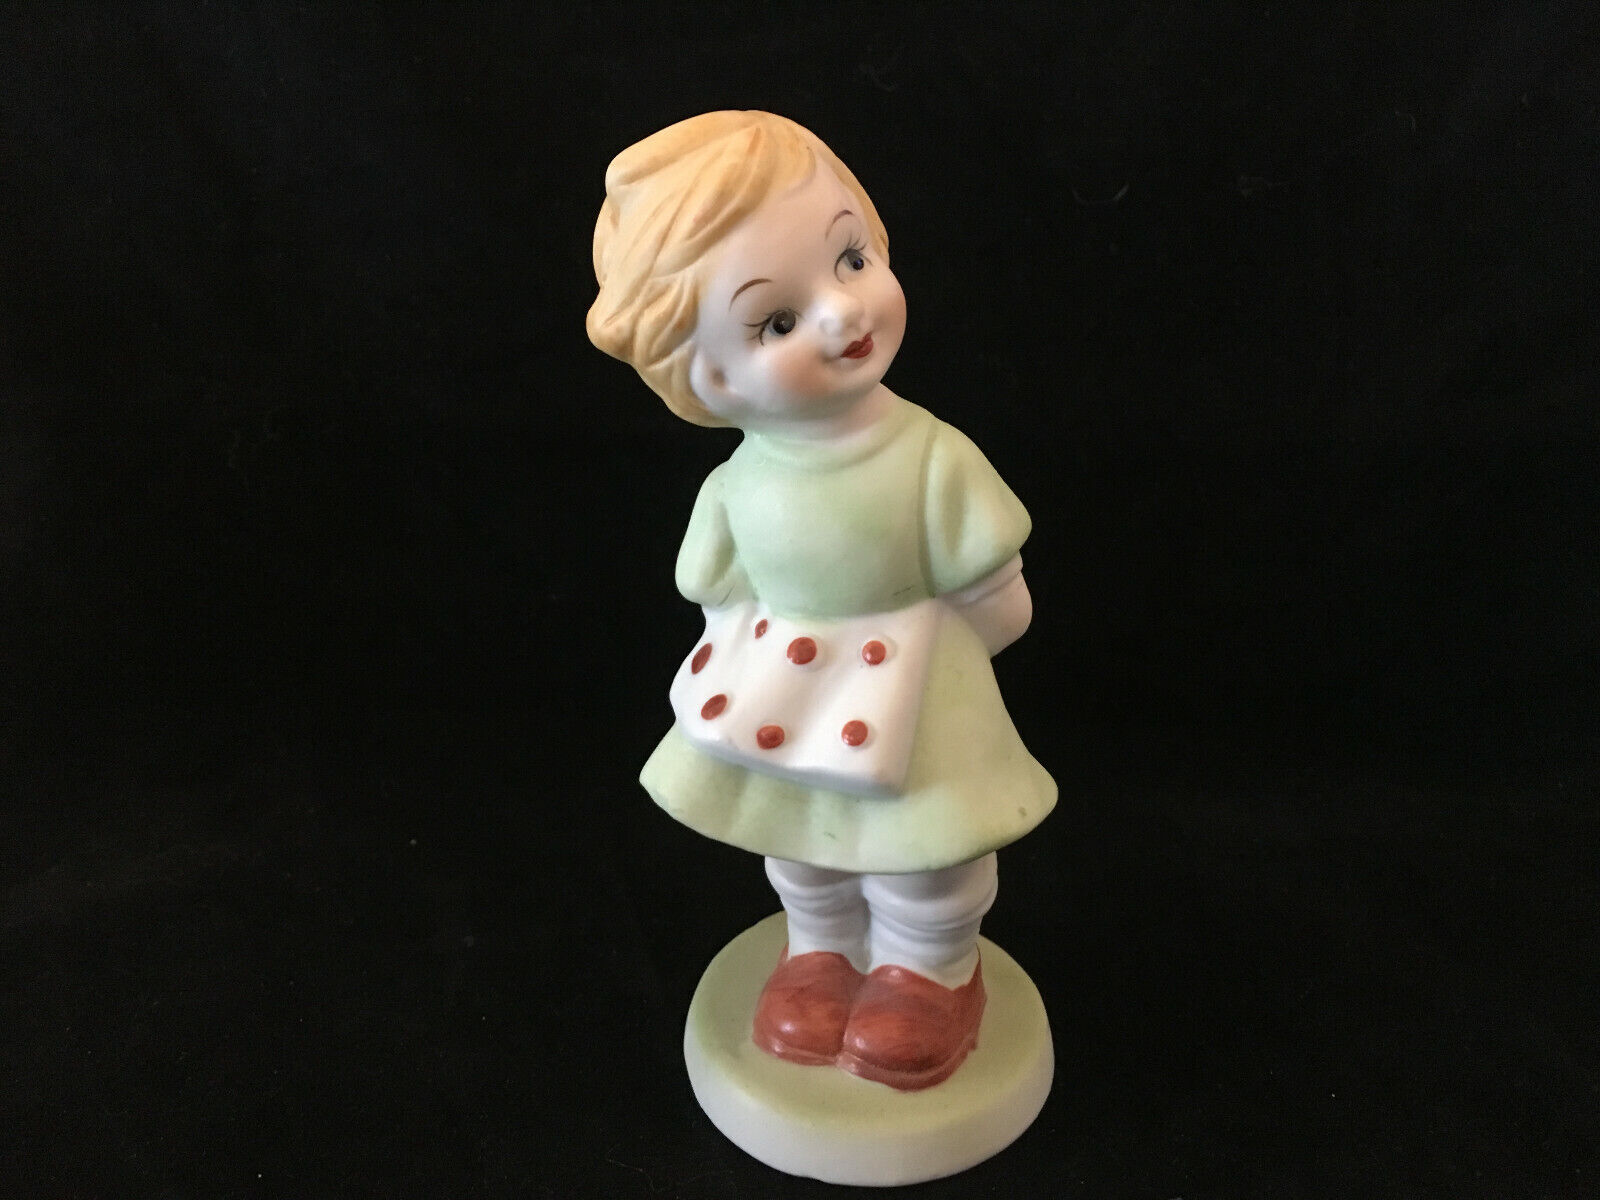 Vintage MOMS HELPER LITTLE GIRL WITH APRON Figurine NANCO